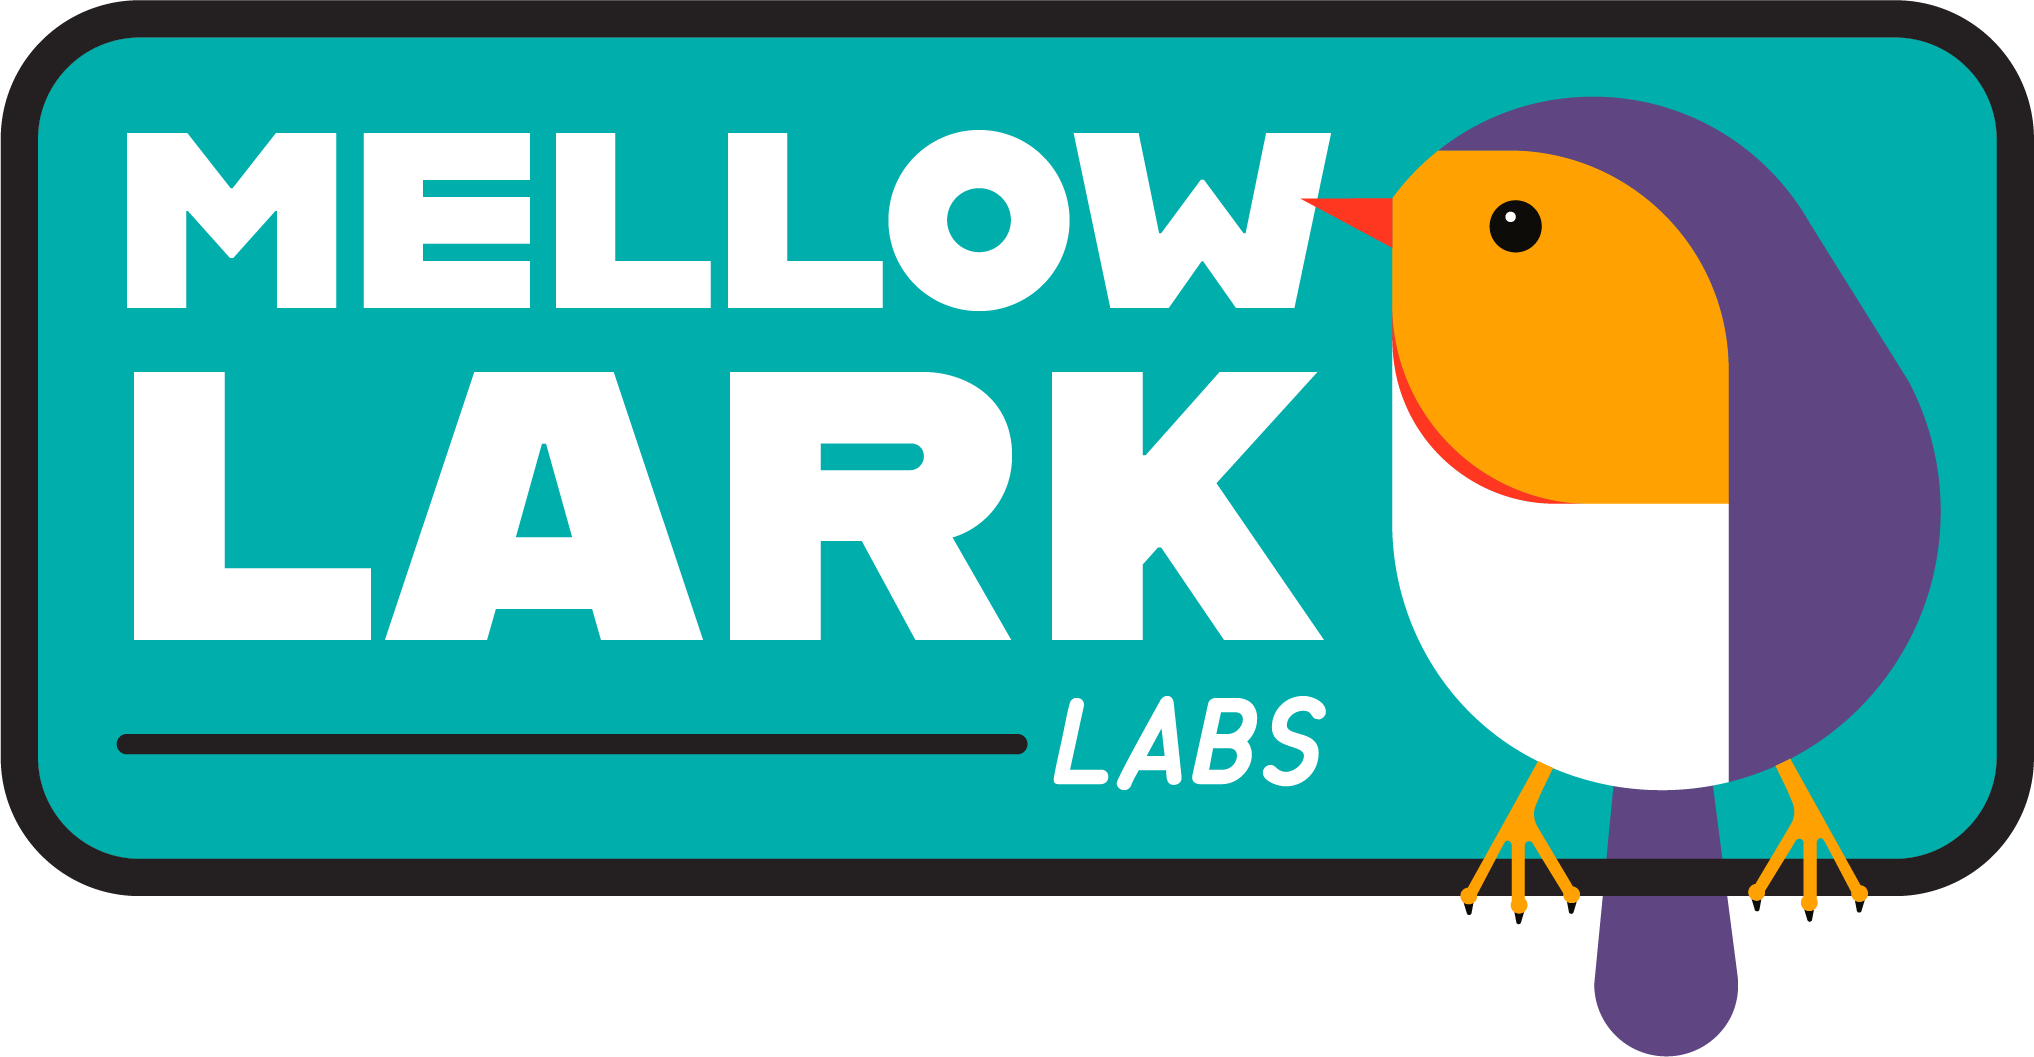 A logo of a curious bird next to the words "Mellowlark Labs"